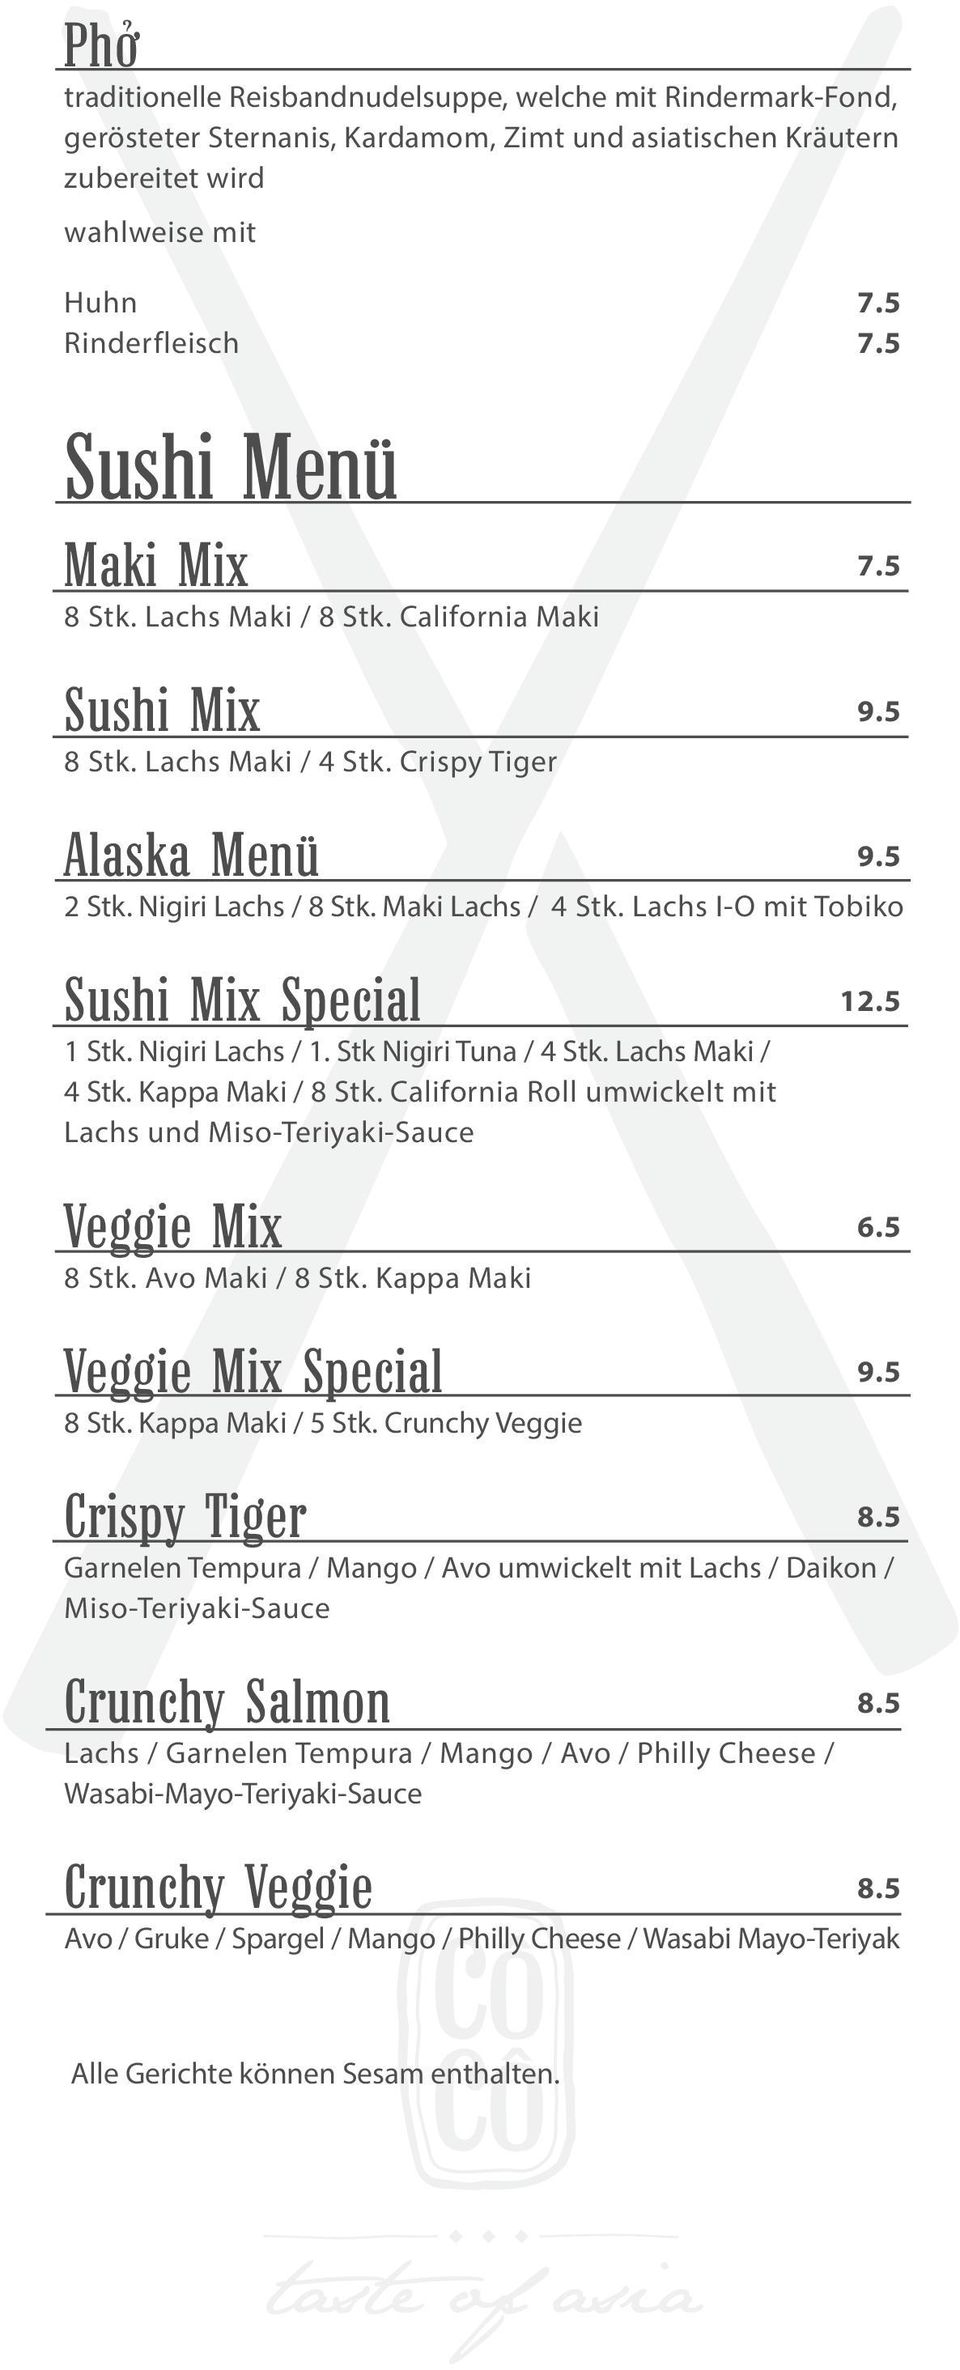 Lachs I-O mit Tobiko Sushi Mix Special 12.5 1 Stk. Nigiri Lachs / 1. Stk Nigiri Tuna / 4 Stk. Lachs Maki / 4 Stk. Kappa Maki / 8 Stk.